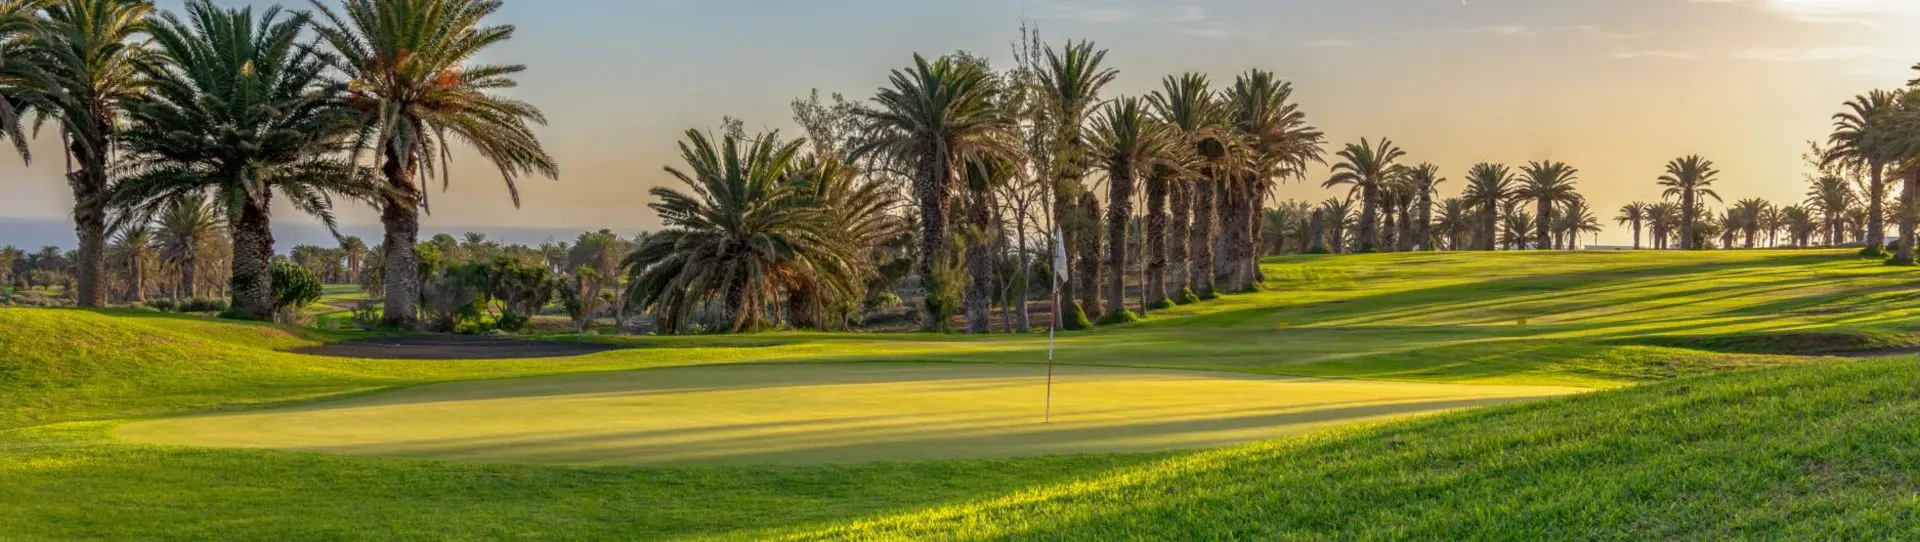 Spain golf courses - Golf Costa Teguise - Photo 1